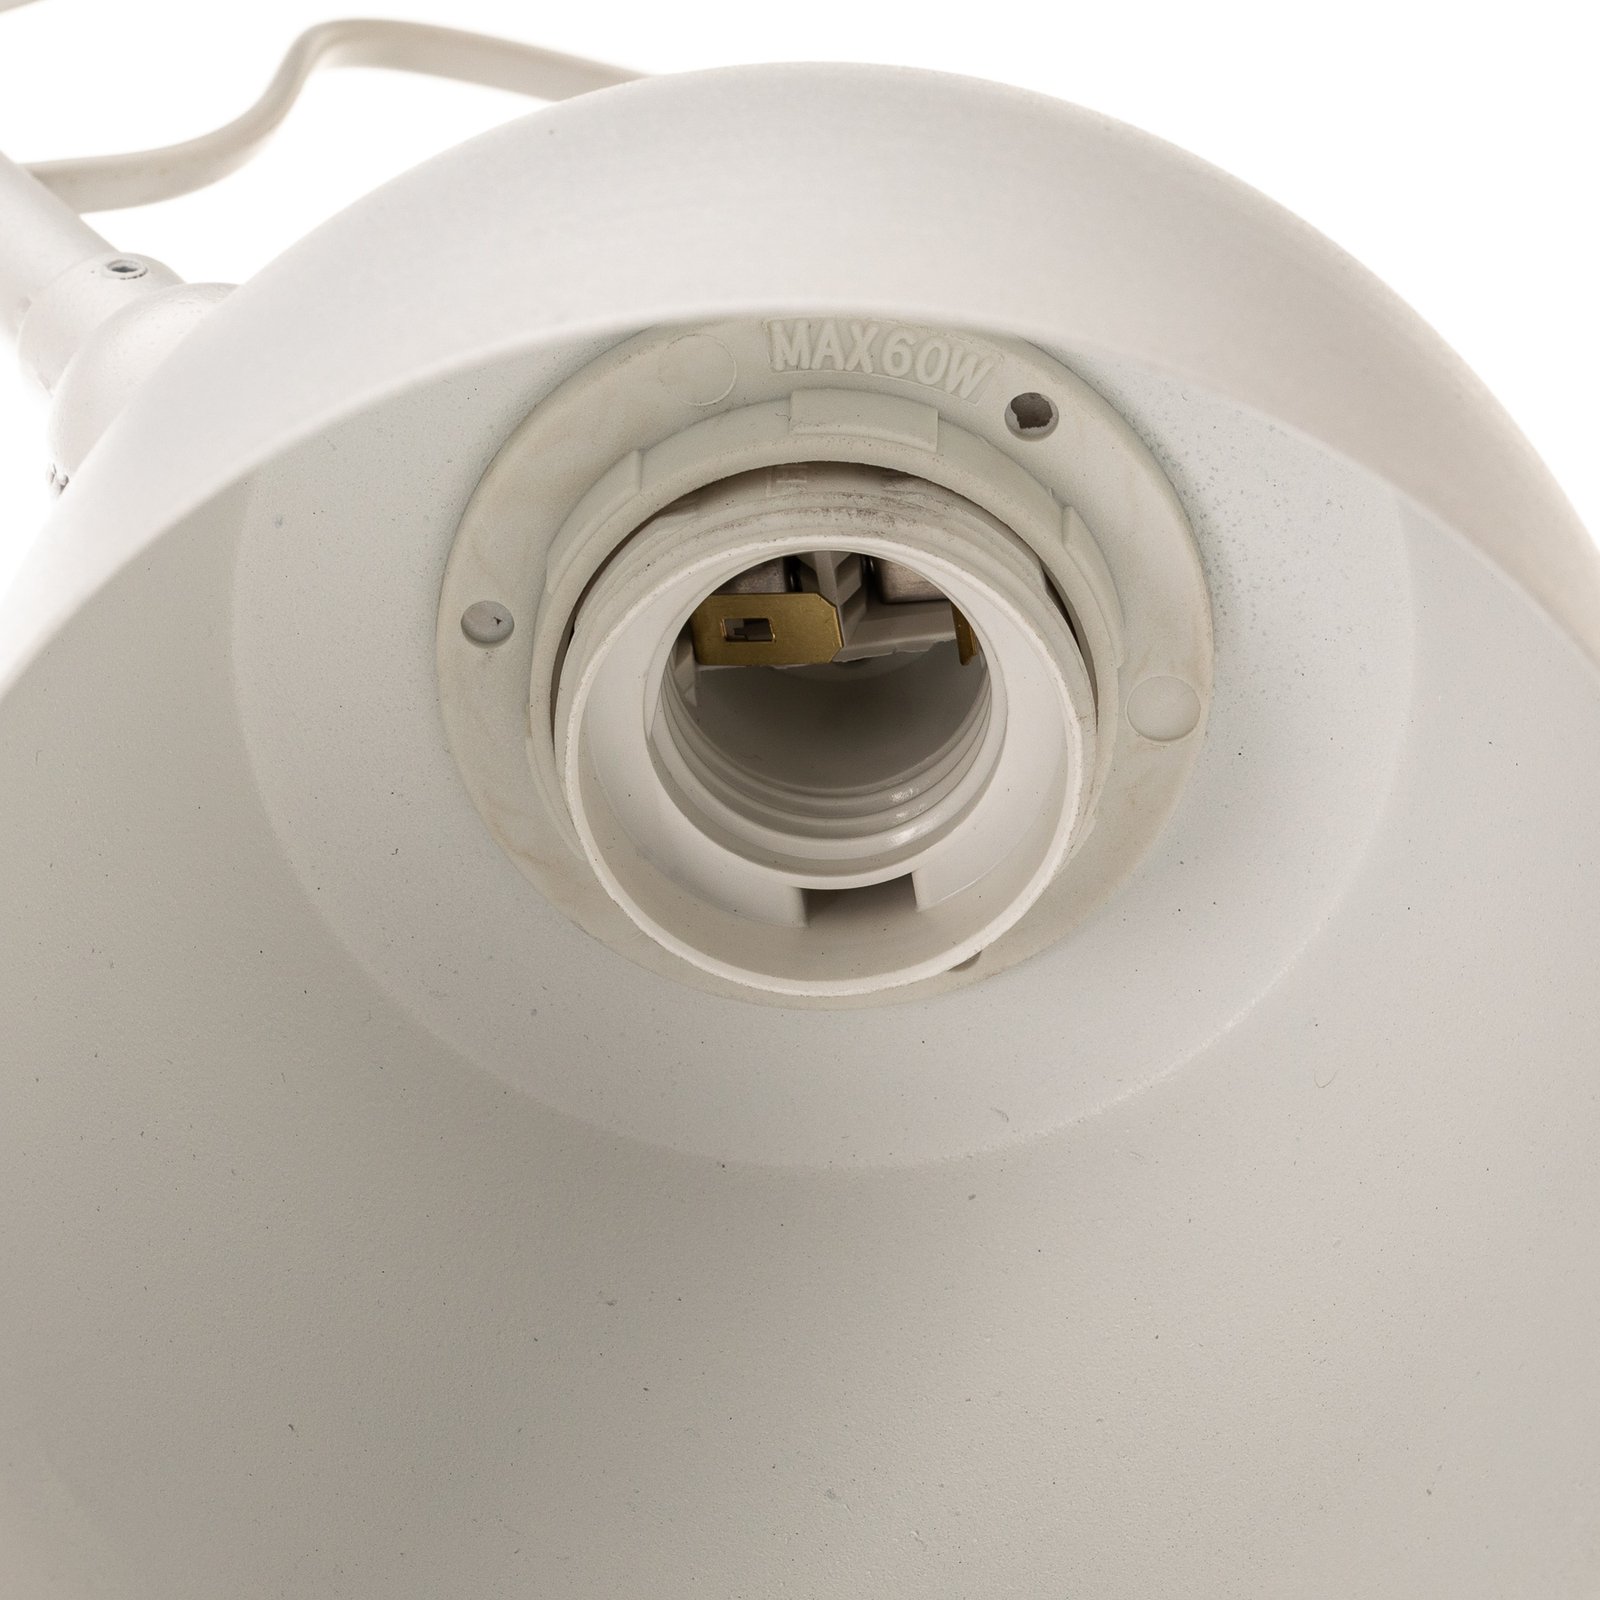 1002 wall light with plug, 2-bulb, white